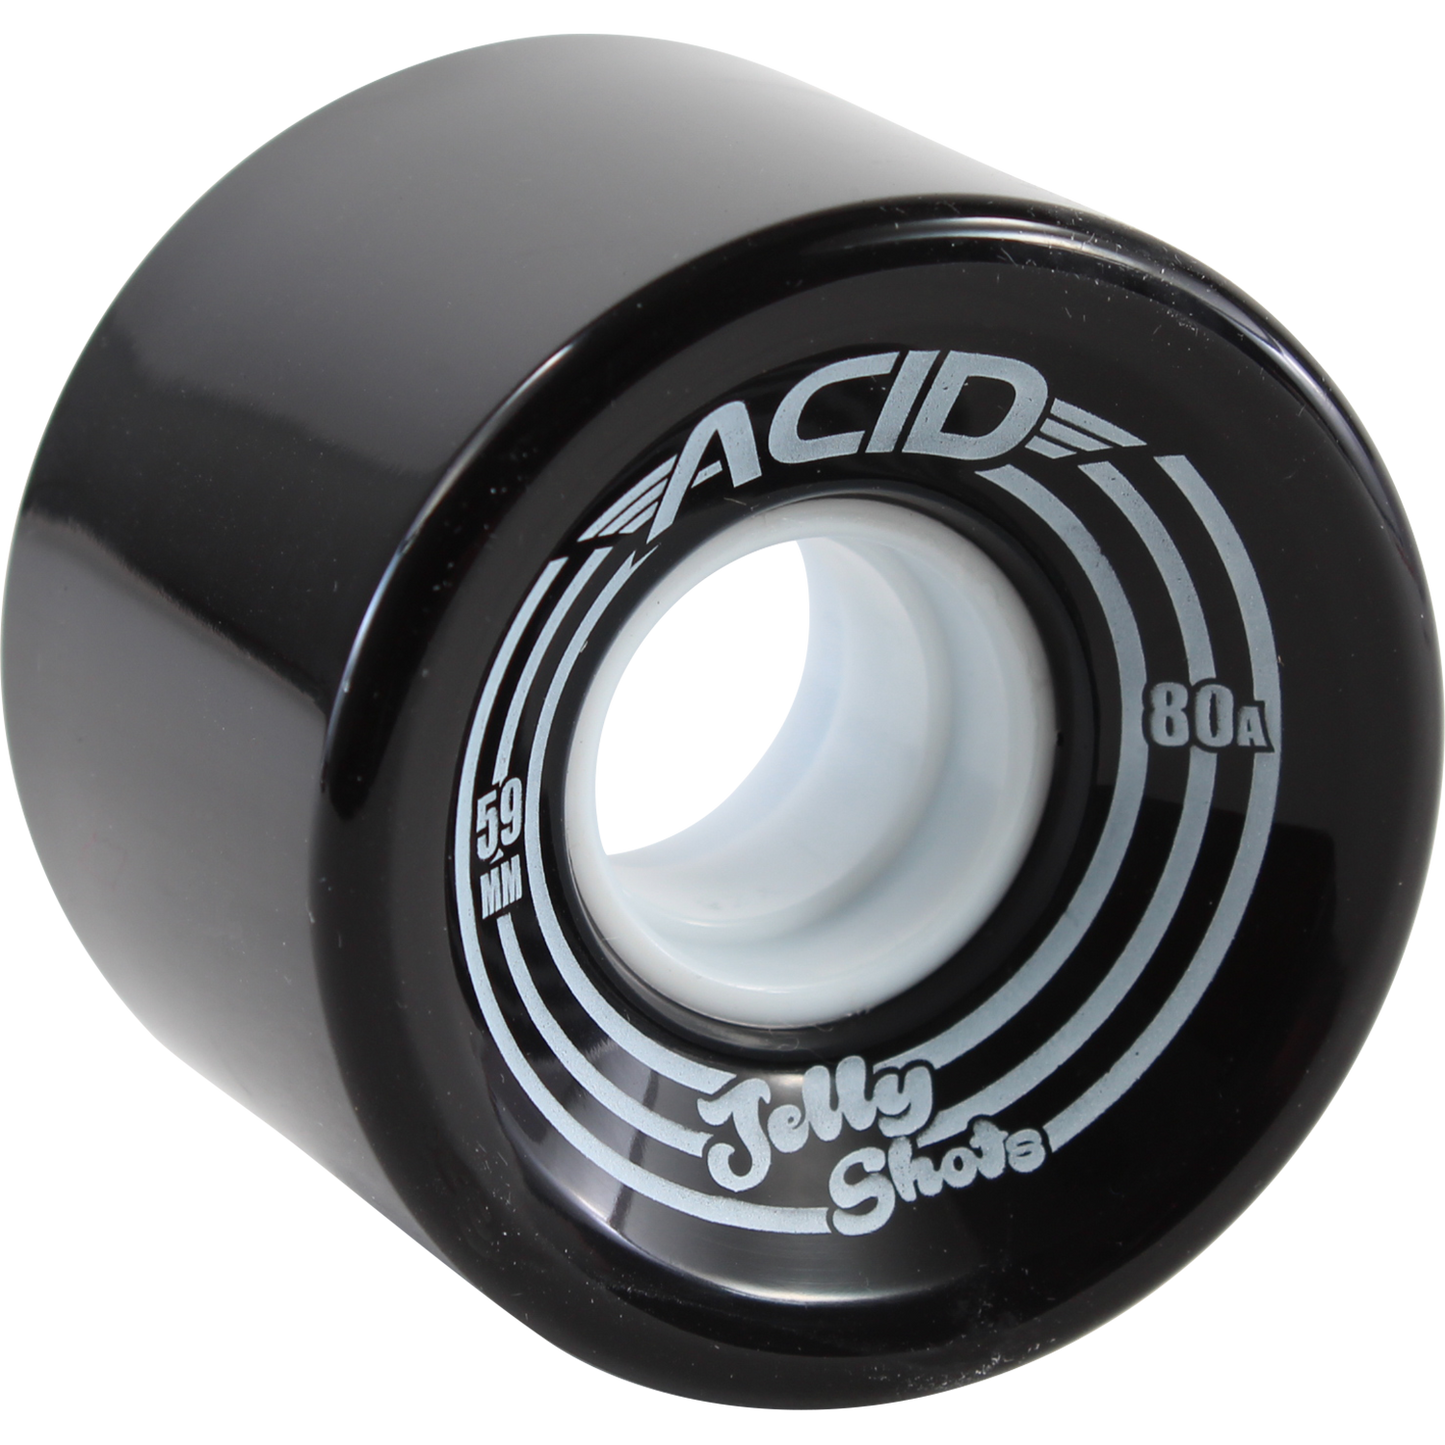 Acid Jelly Shots 59mm 82a Black Skateboard Wheels (Set of 4)